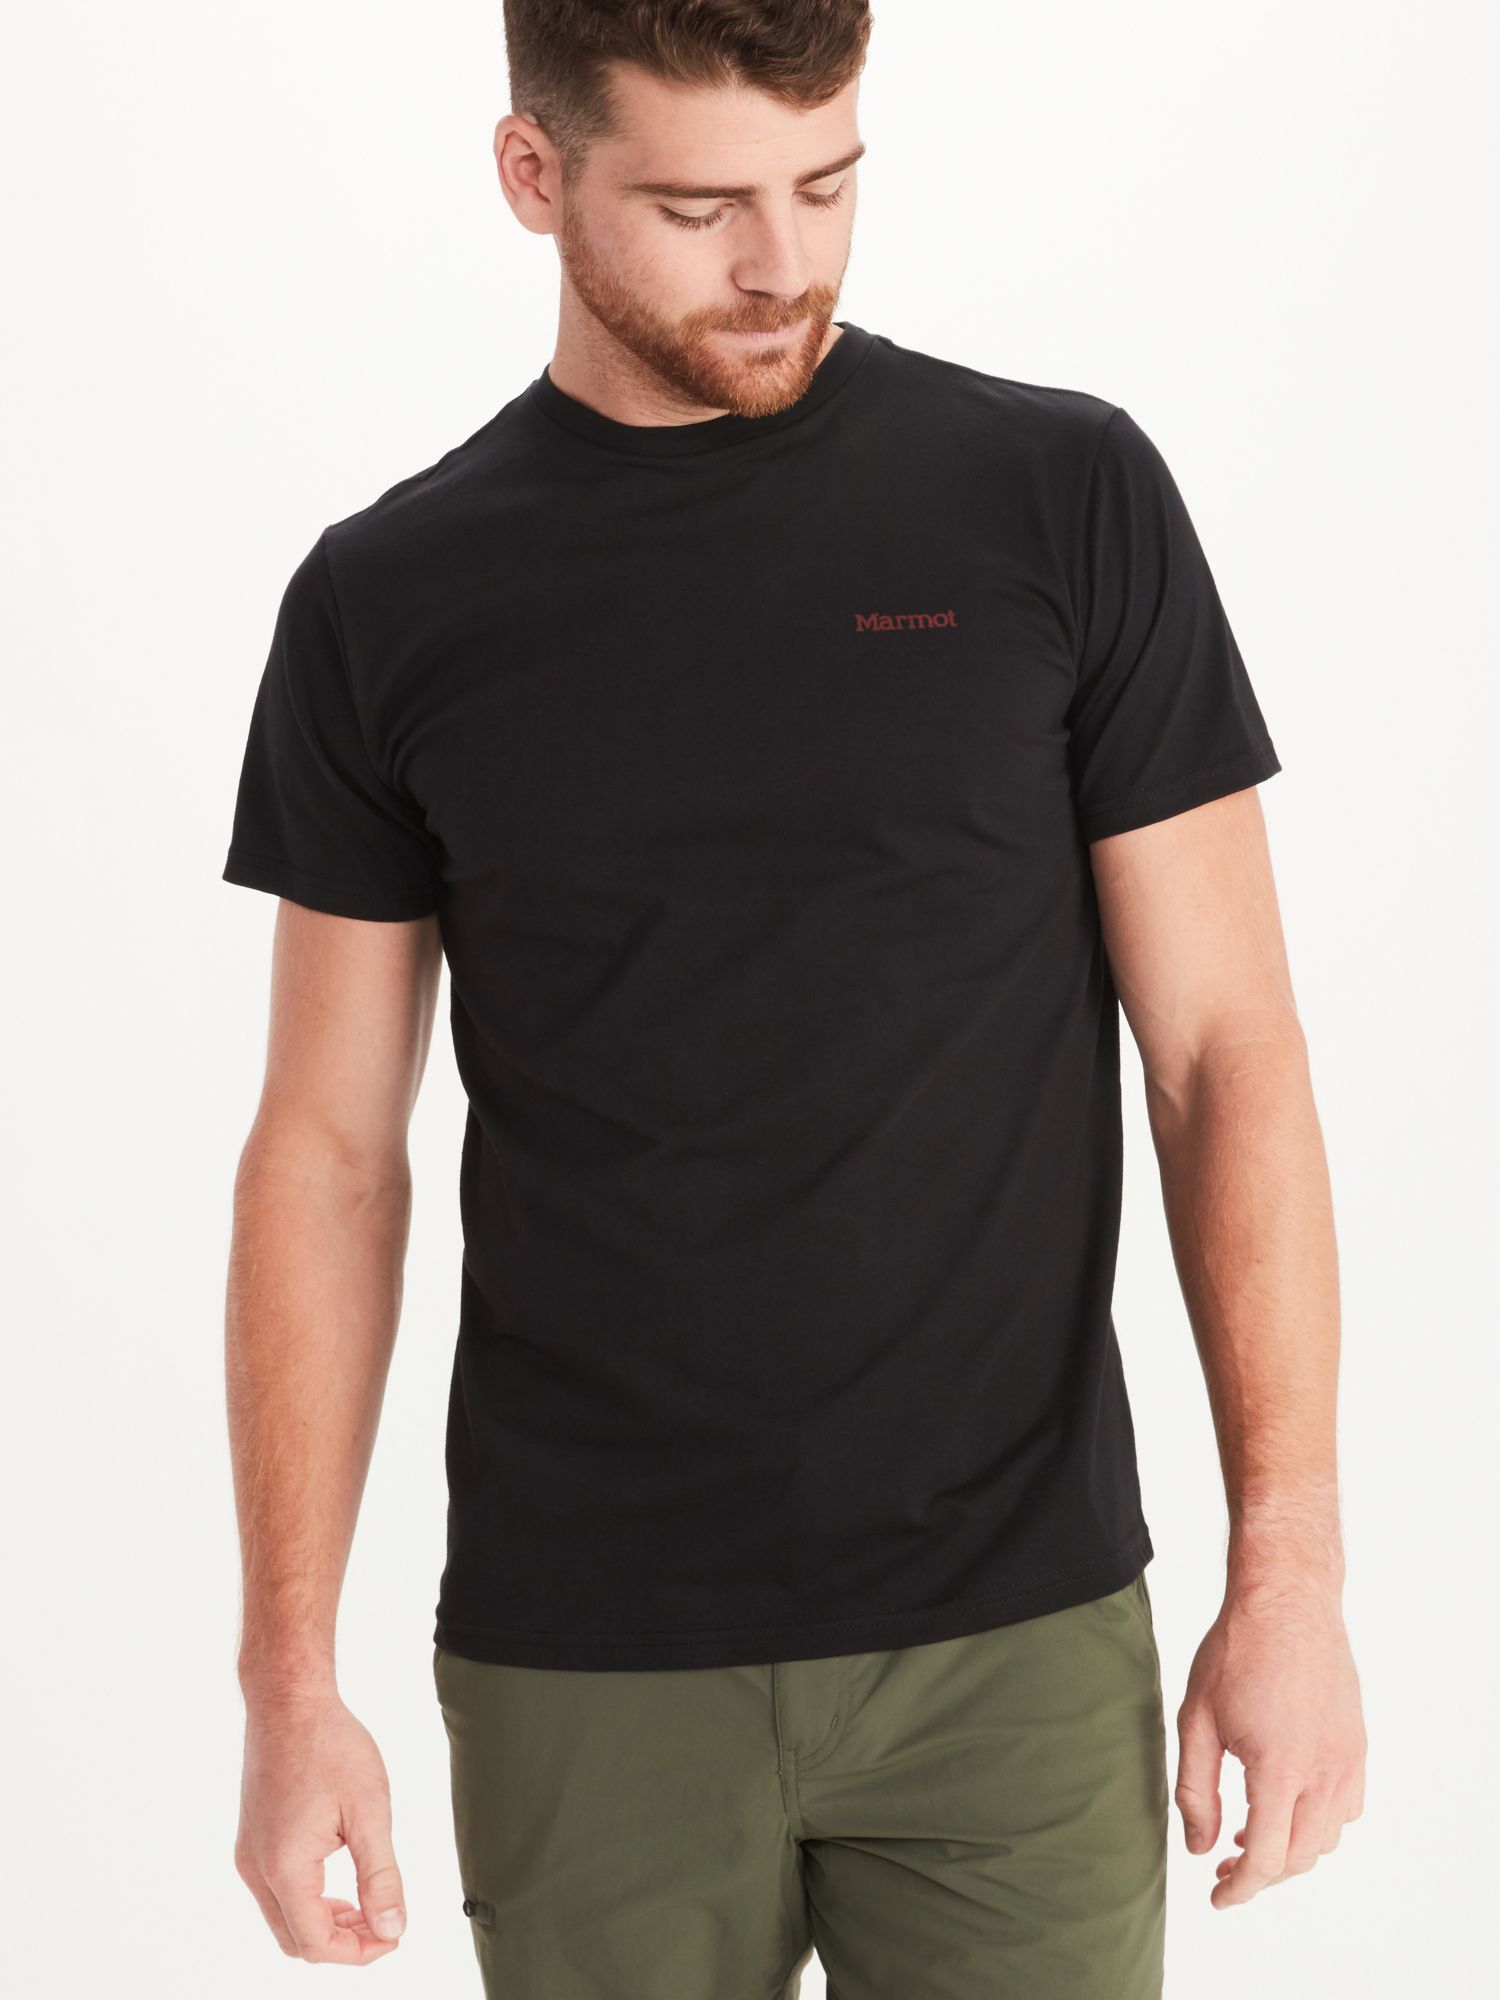 Men's T-Shirts  Tank Tops | Marmot